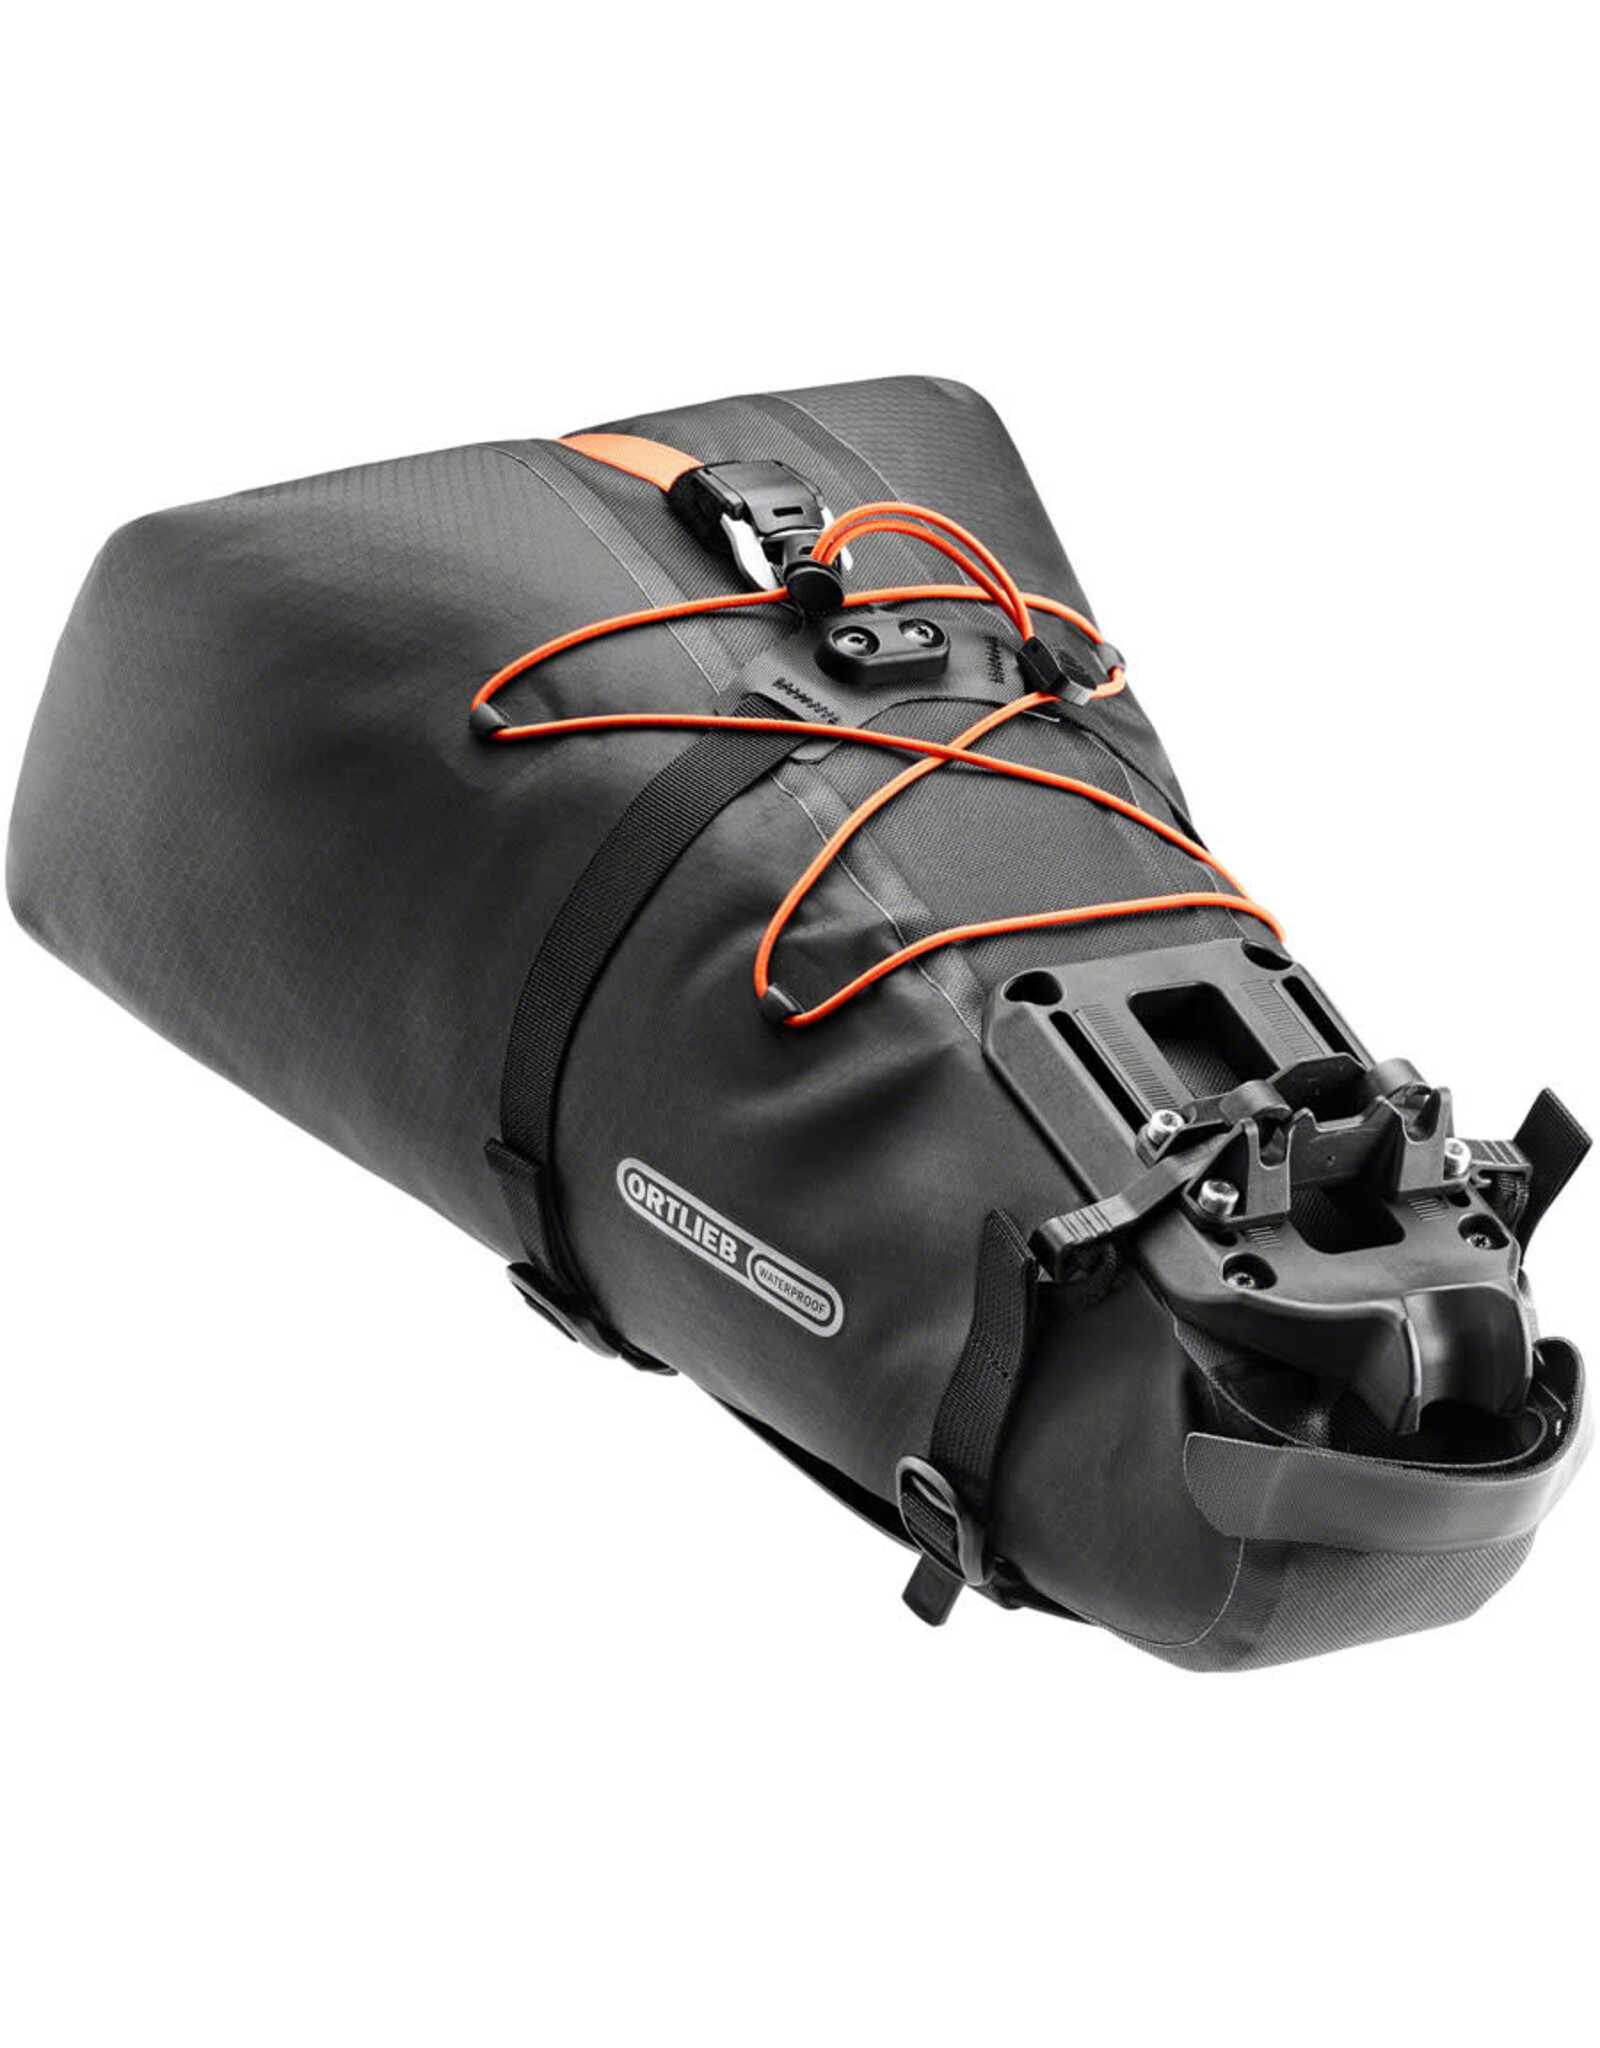 Ortlieb Ortlieb Bikepacking Seat Pack QR Seat Bag - 13L, Black